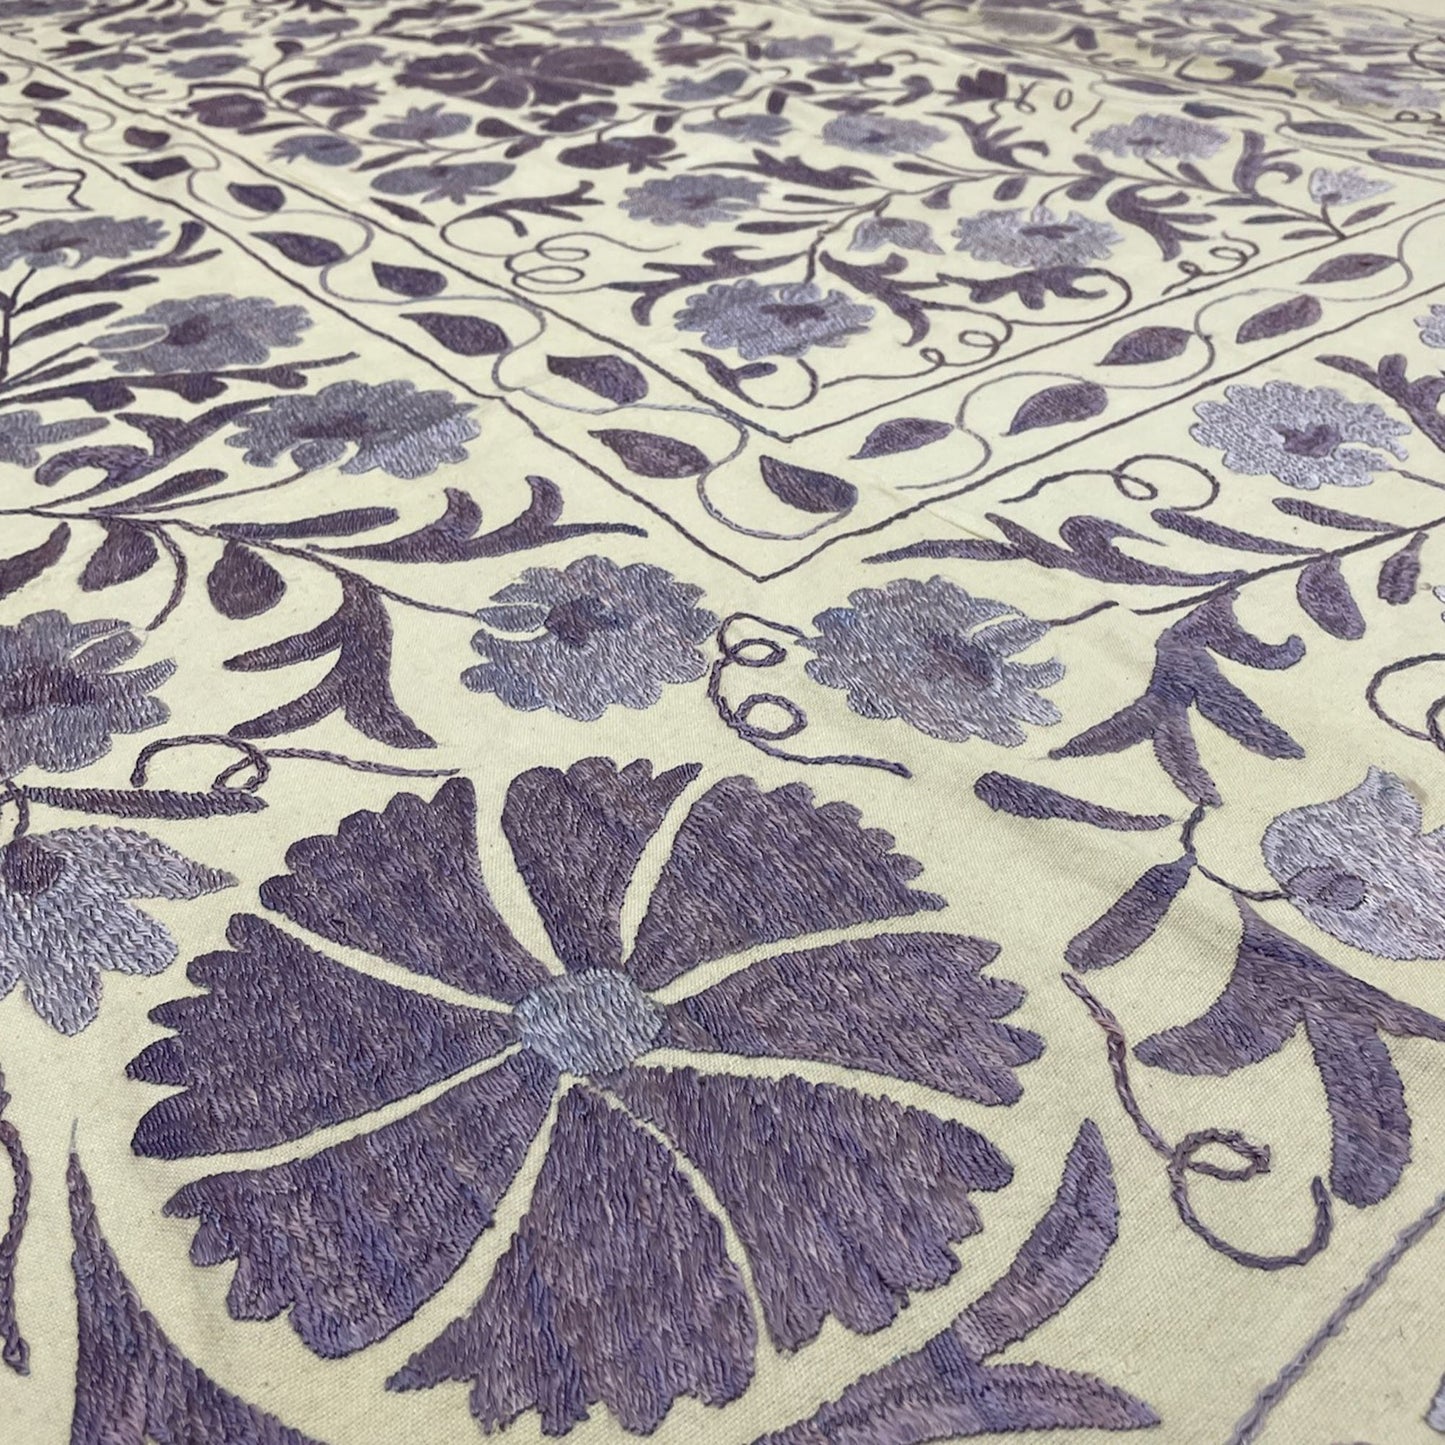 Uzbeki Suzani Hand Embroidered Textile Wall Hanging | Home Décor | Throw | 140xm x 205cm SUZ1205007 - Wildash London